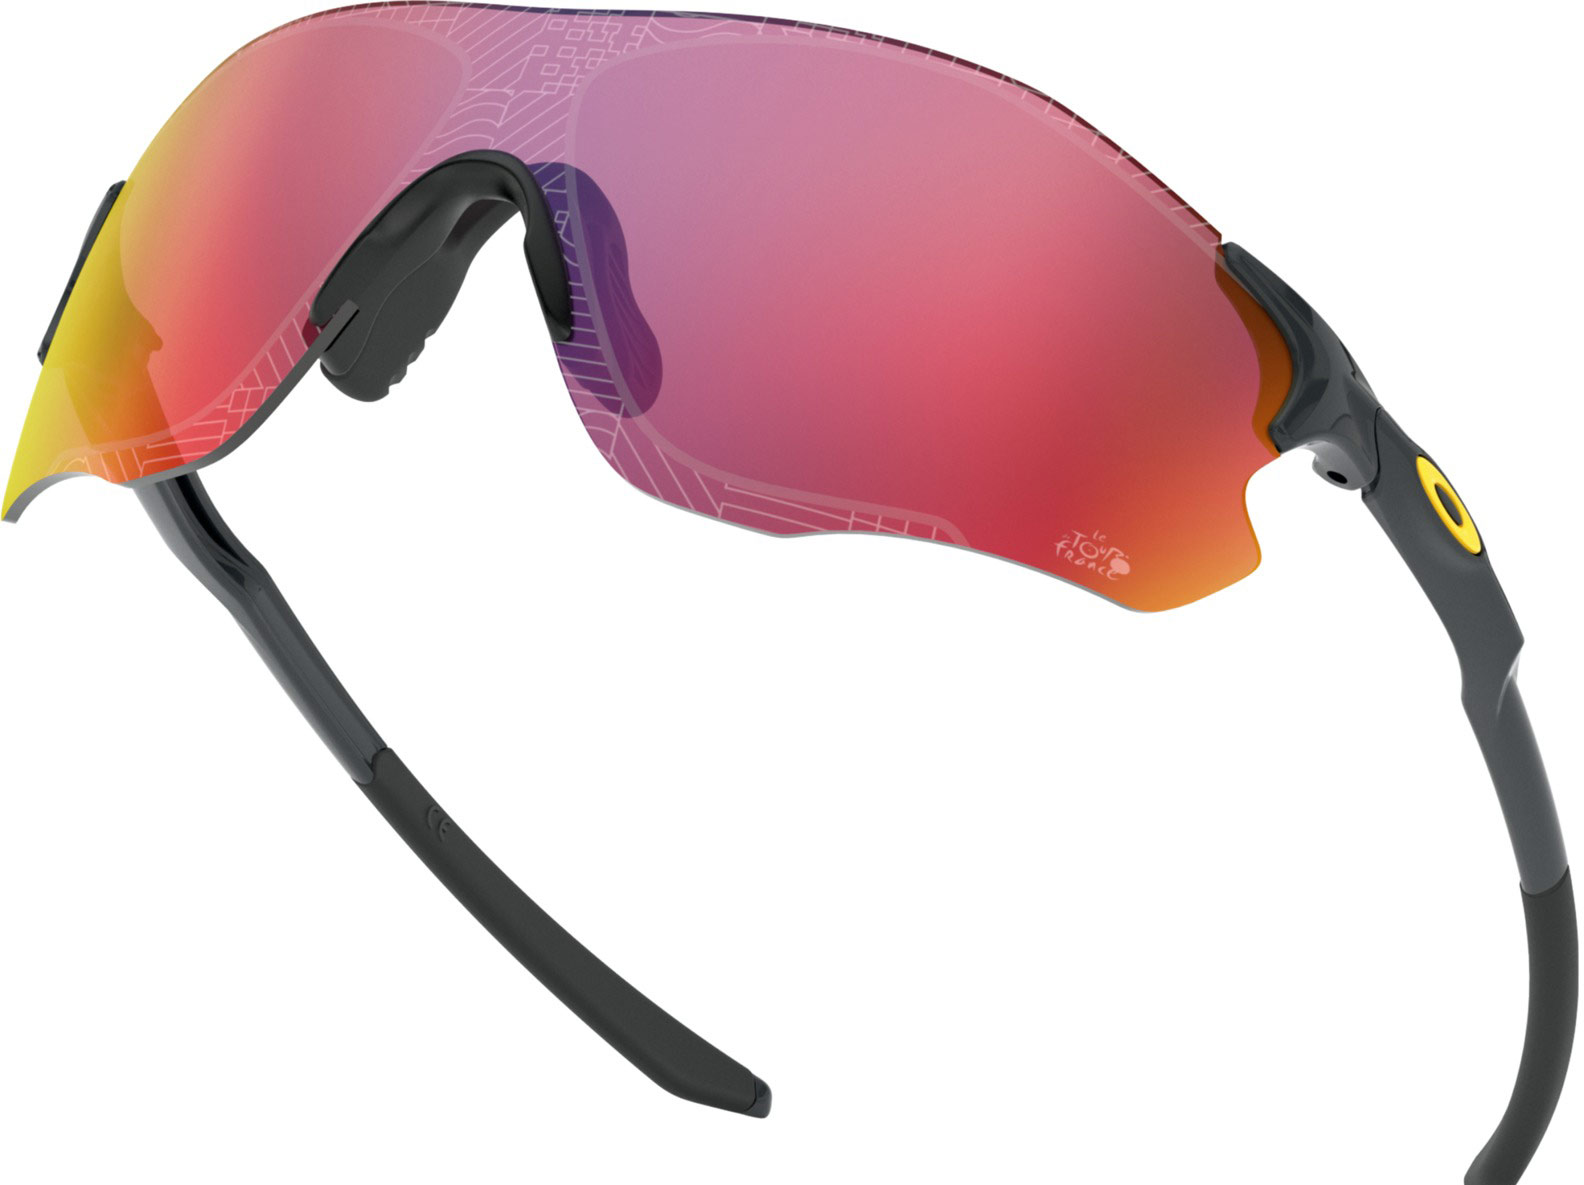 Multi-sport sunglasses